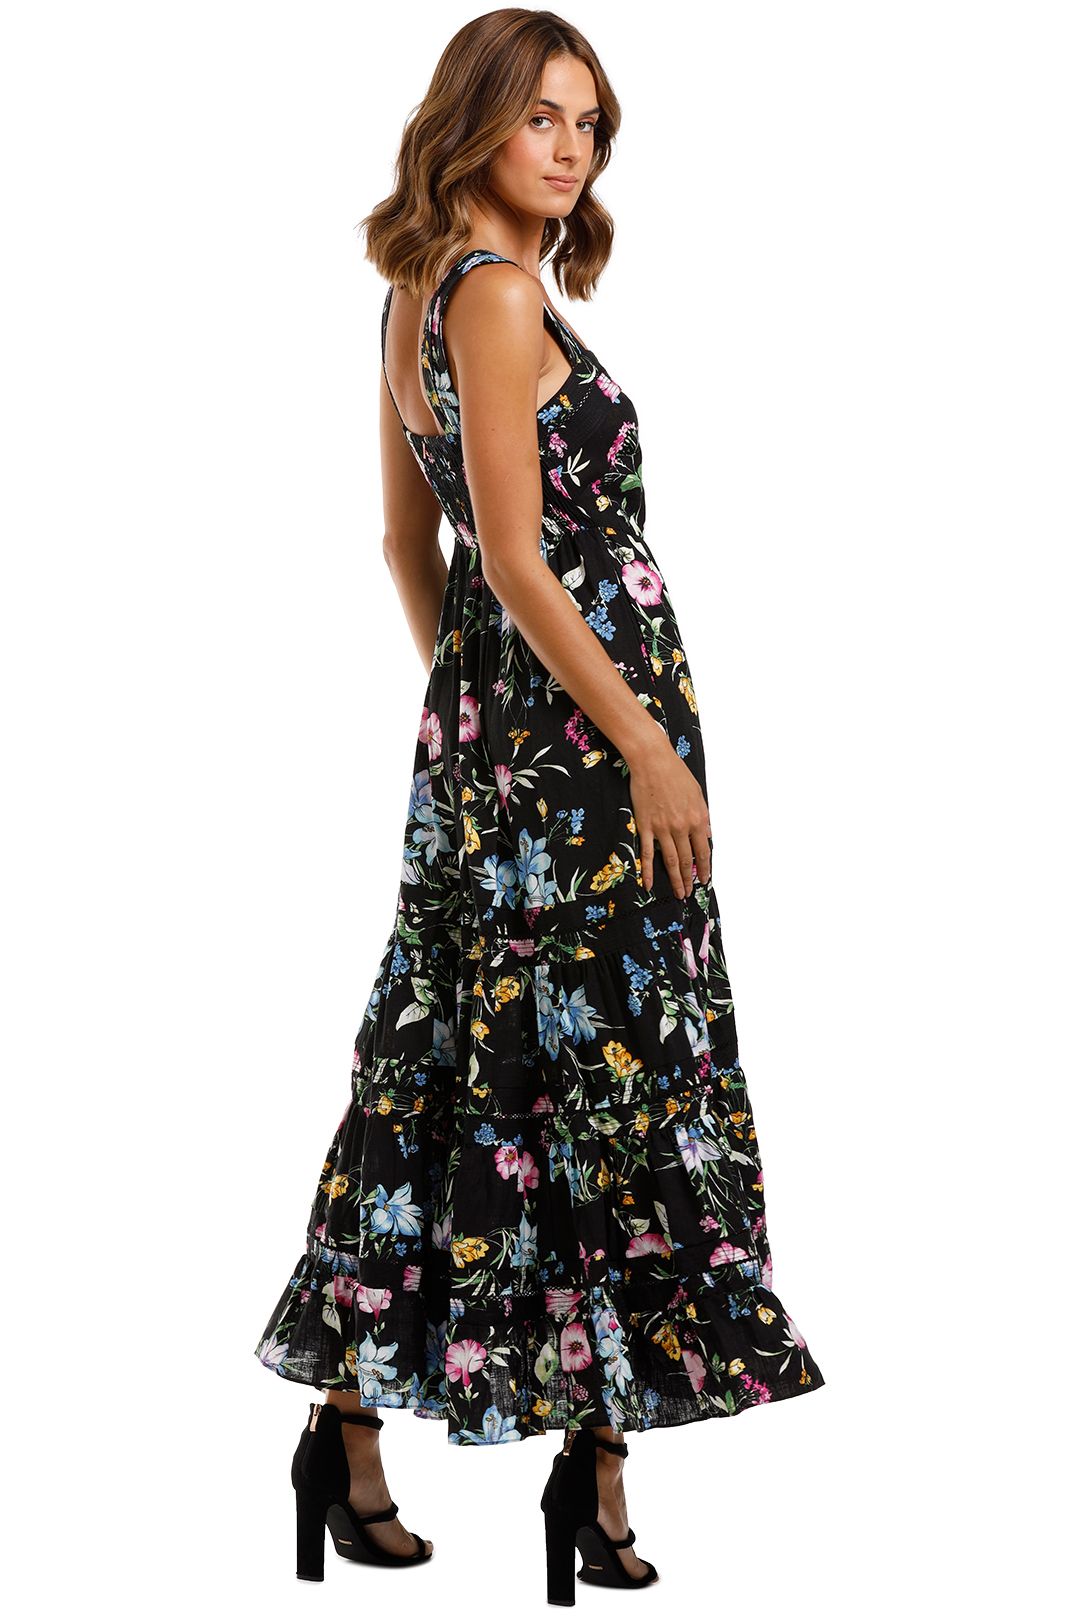 Misa LA Aurelia Dress dark floral